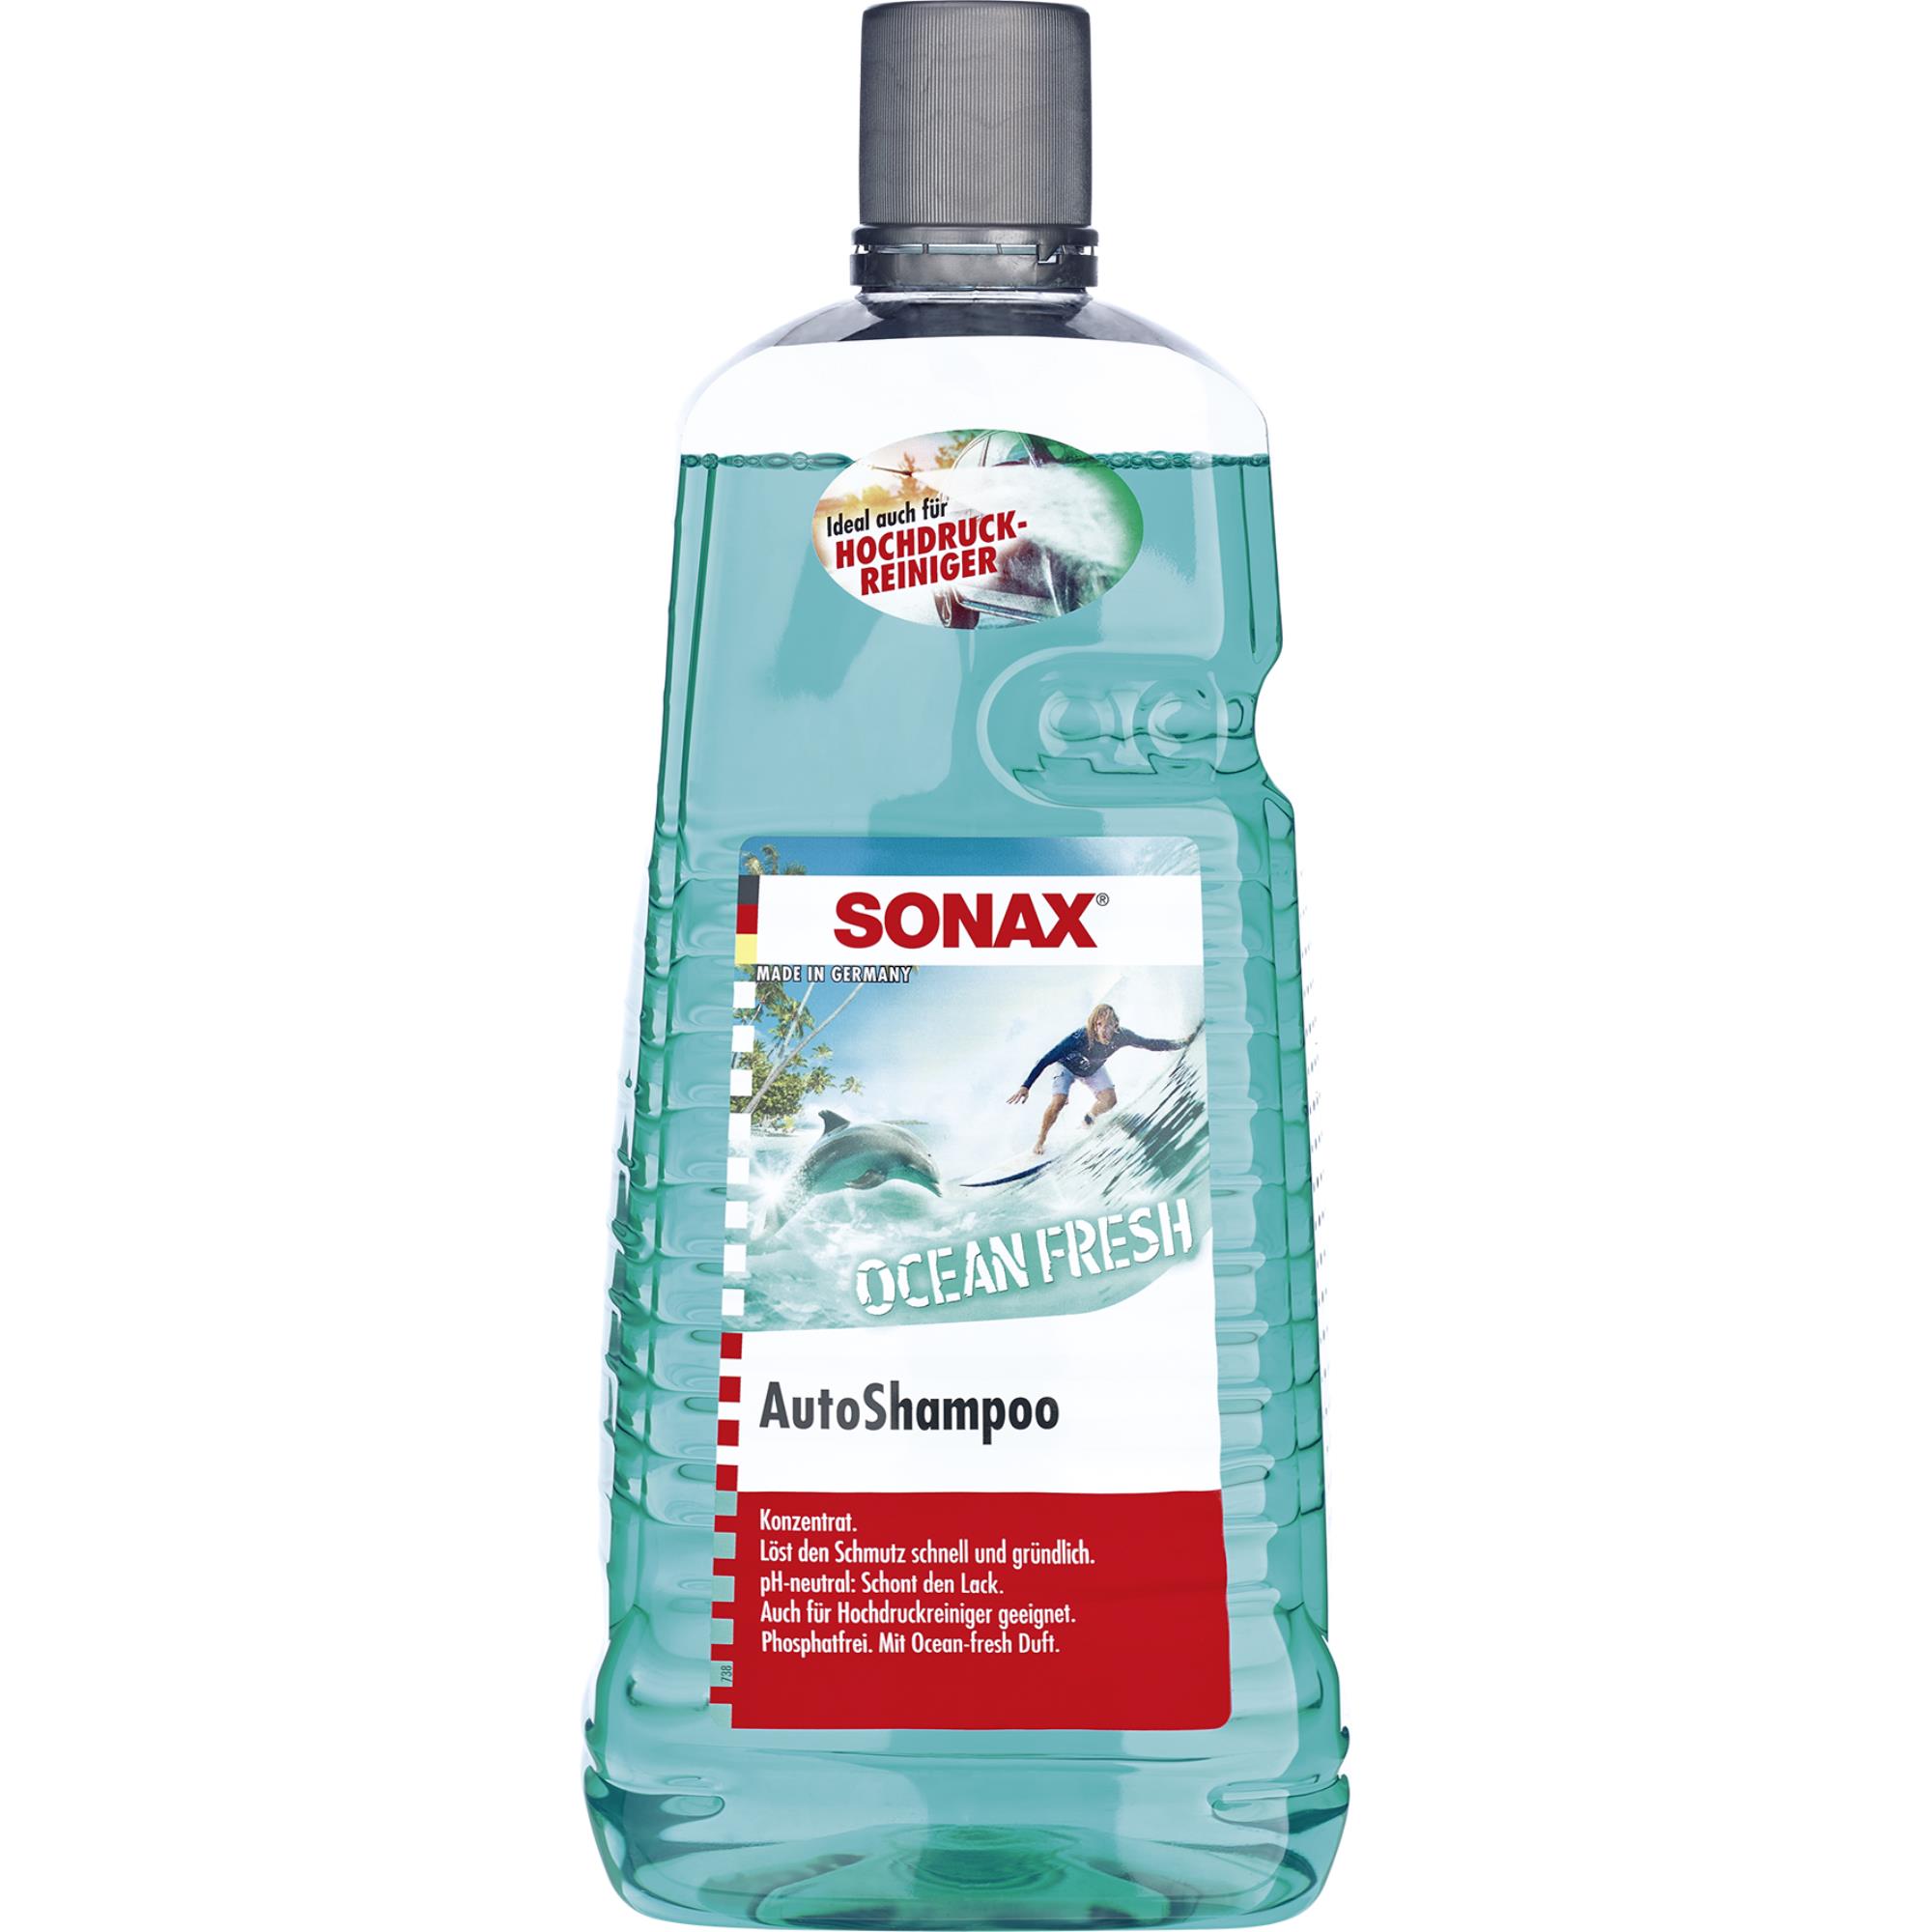 SONAX 03255410 AutoShampoo Konzentrat Ocean-Fresh Auto Shampoo 2 Liter